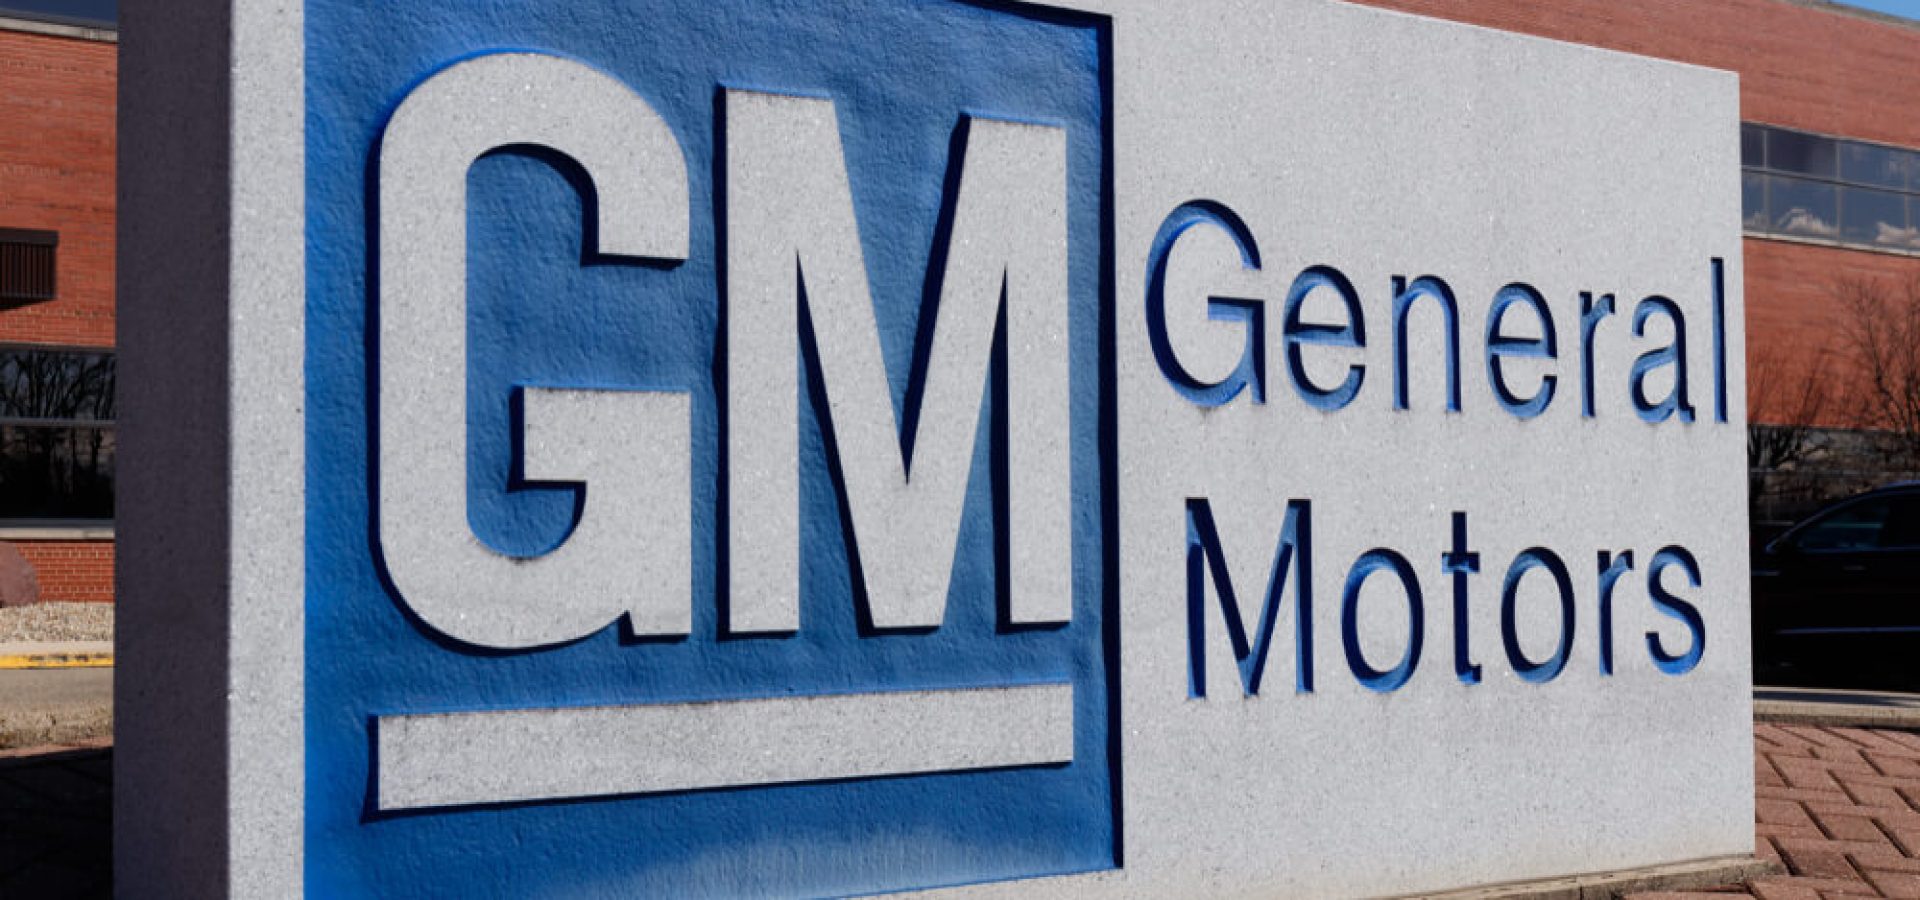 General Motors Logo and Signage.